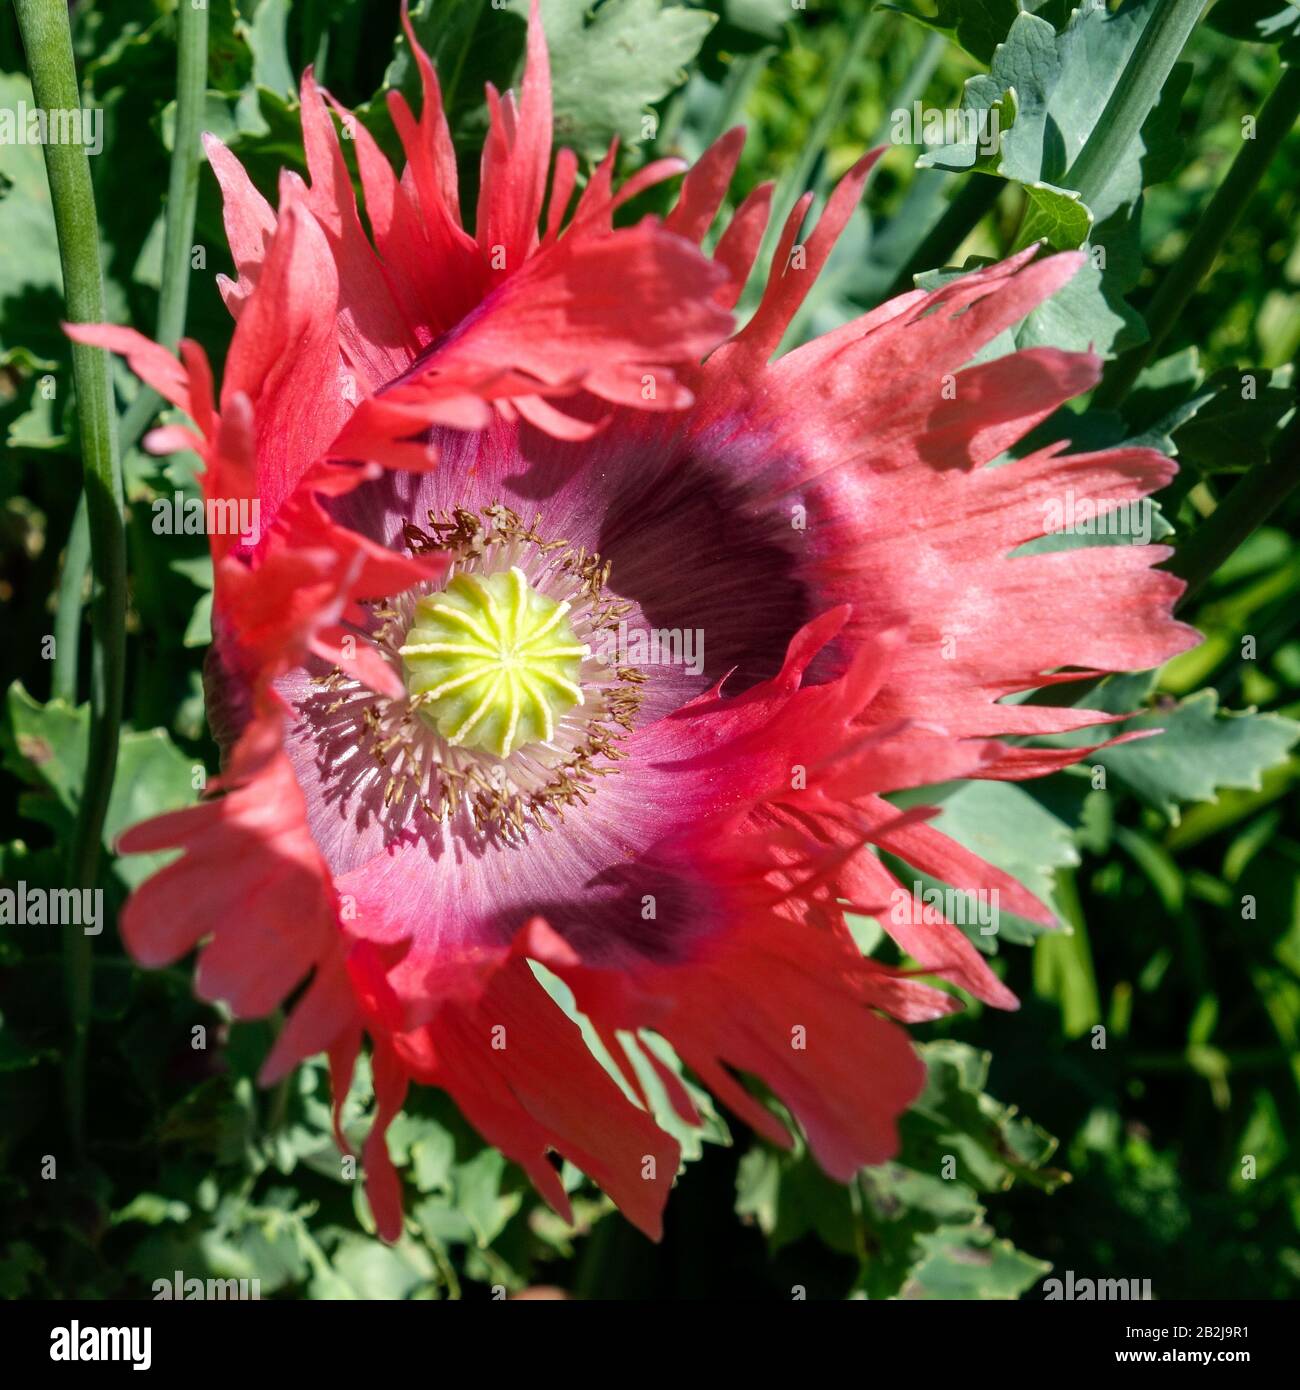 Giant Opium Poppy Pionvallmo (Papaver somniferum) Stock Photo